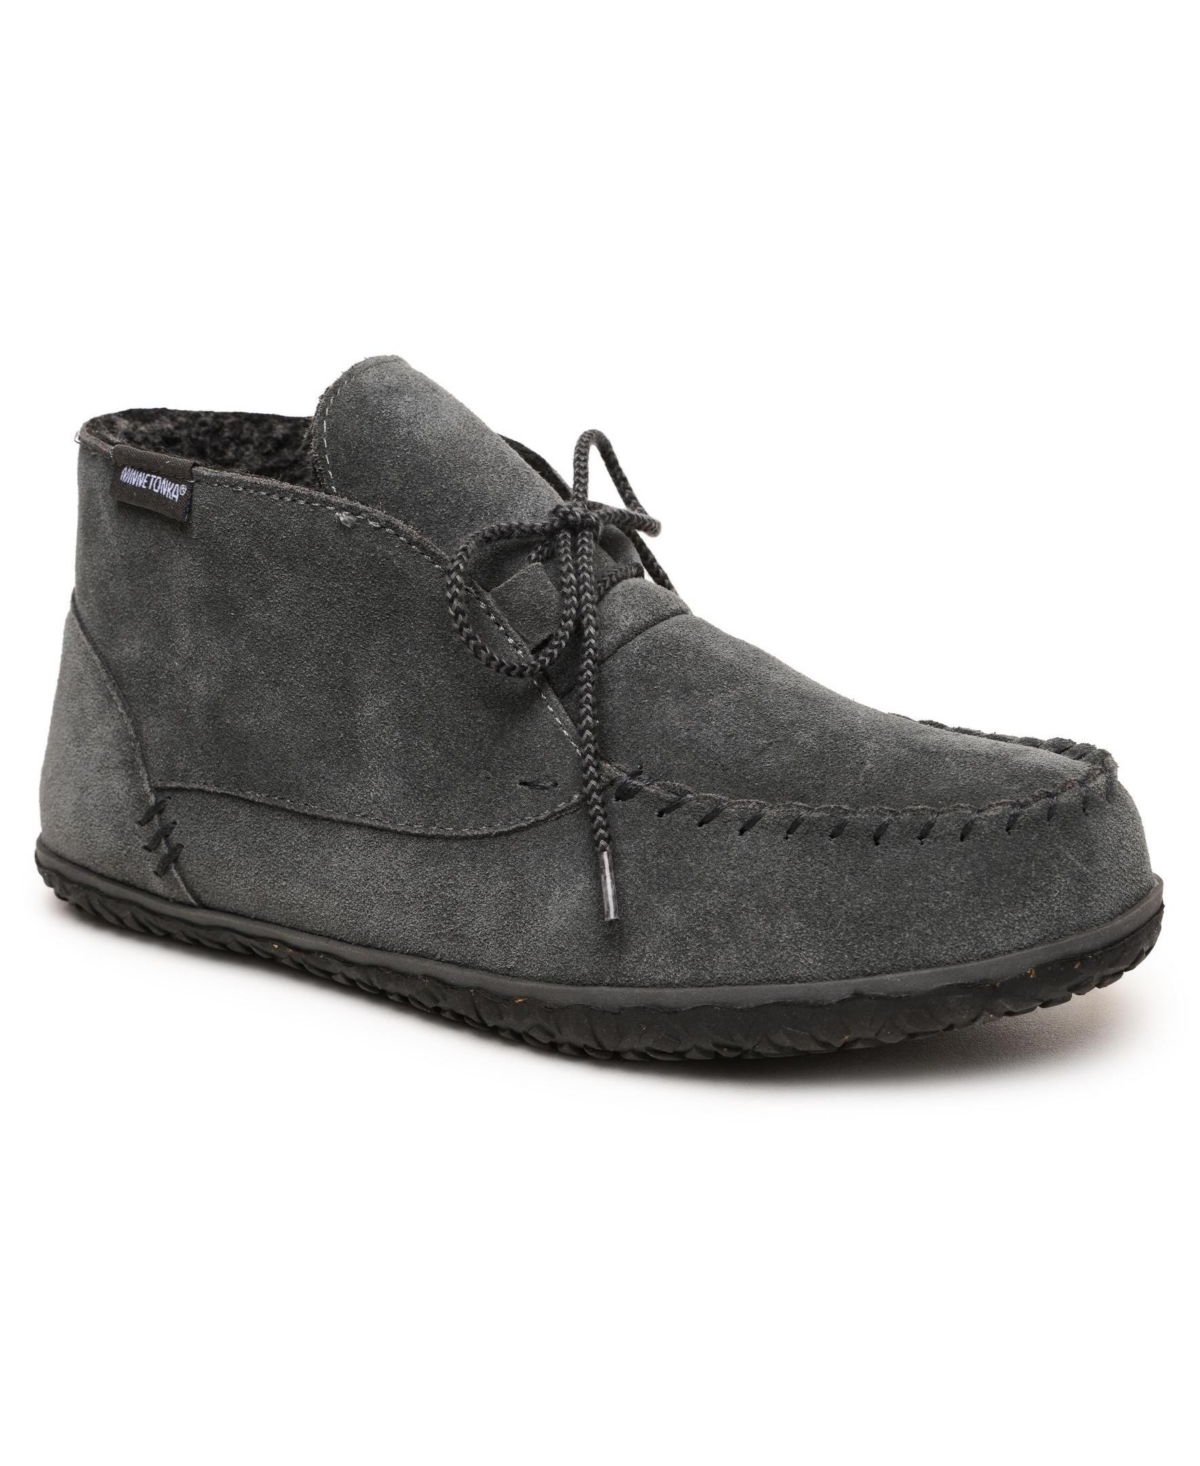 Men's Torrey Boots - Charcoal